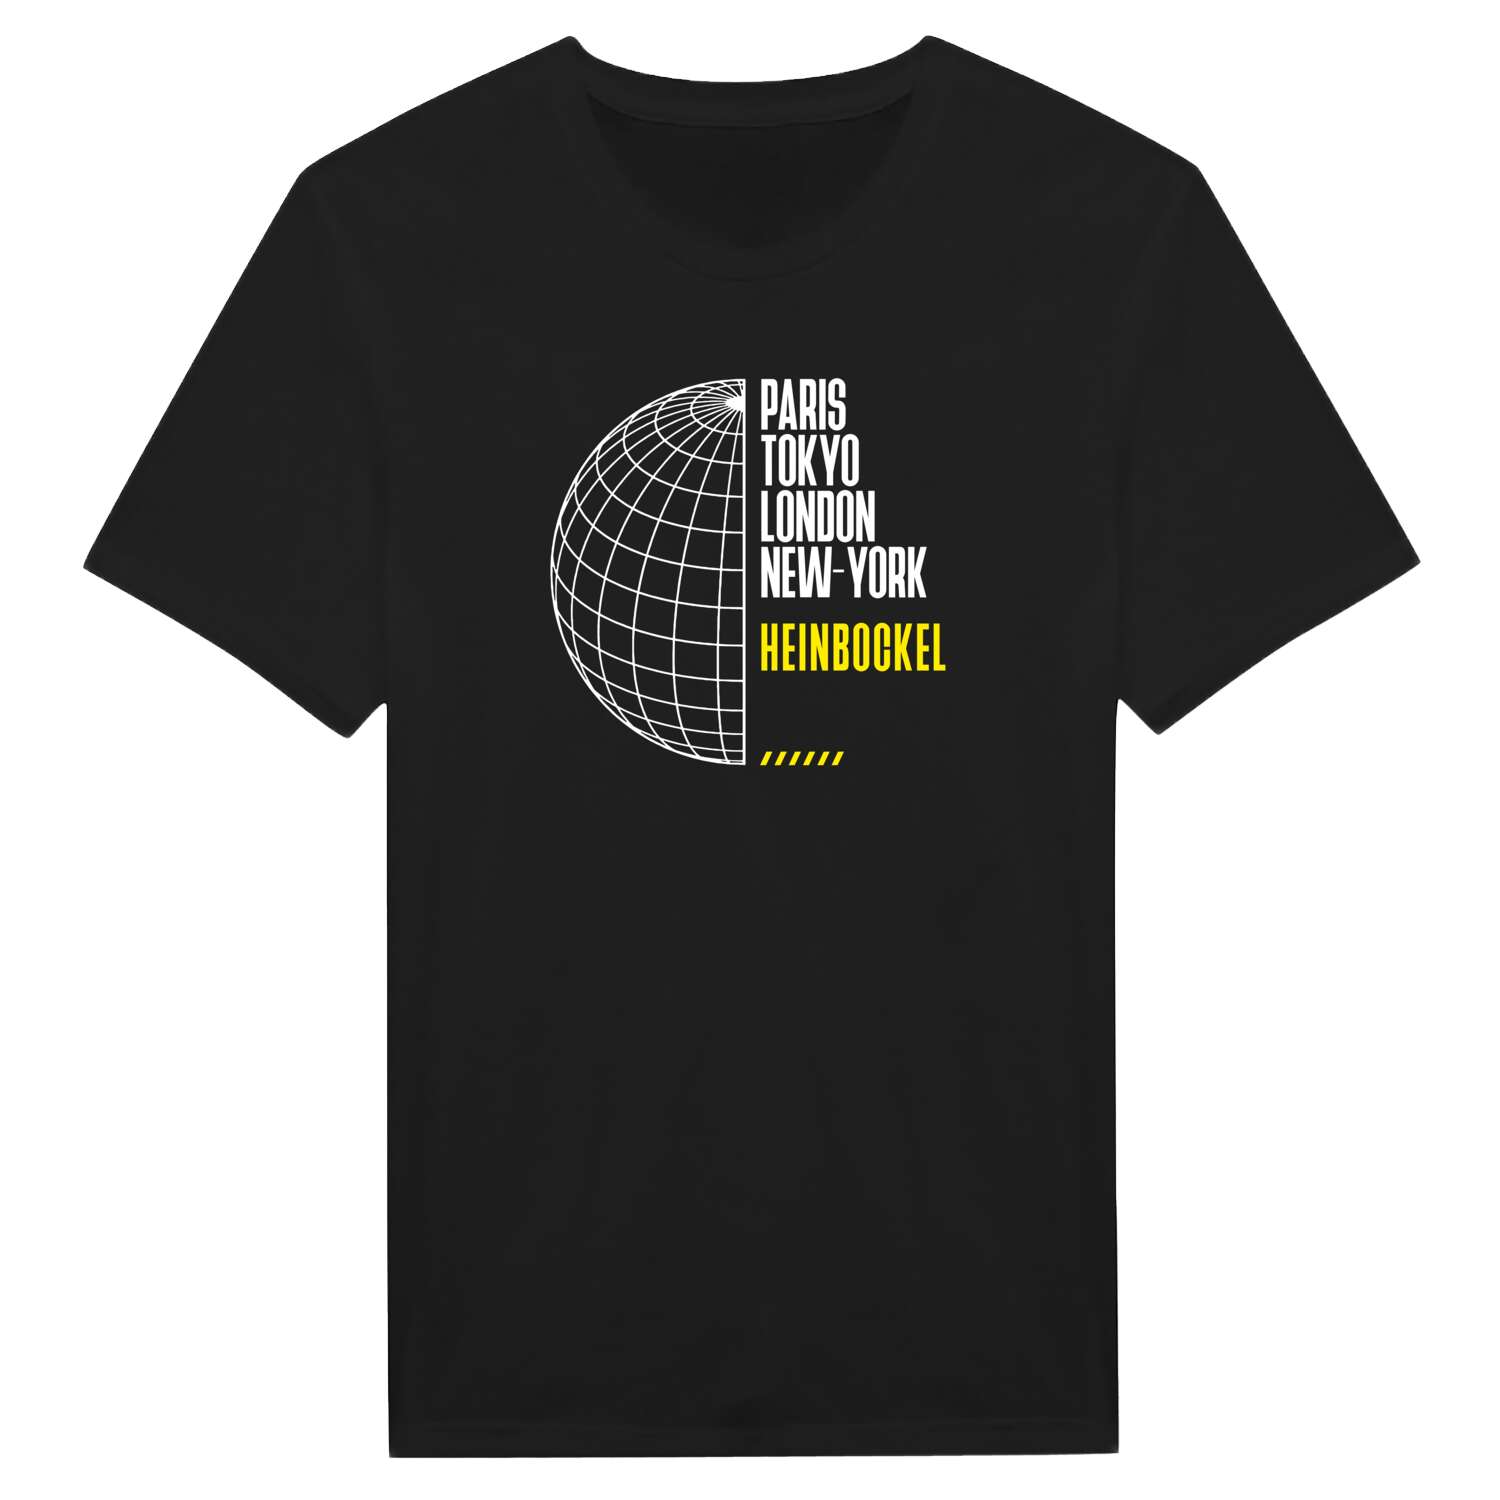 Heinbockel T-Shirt »Paris Tokyo London«